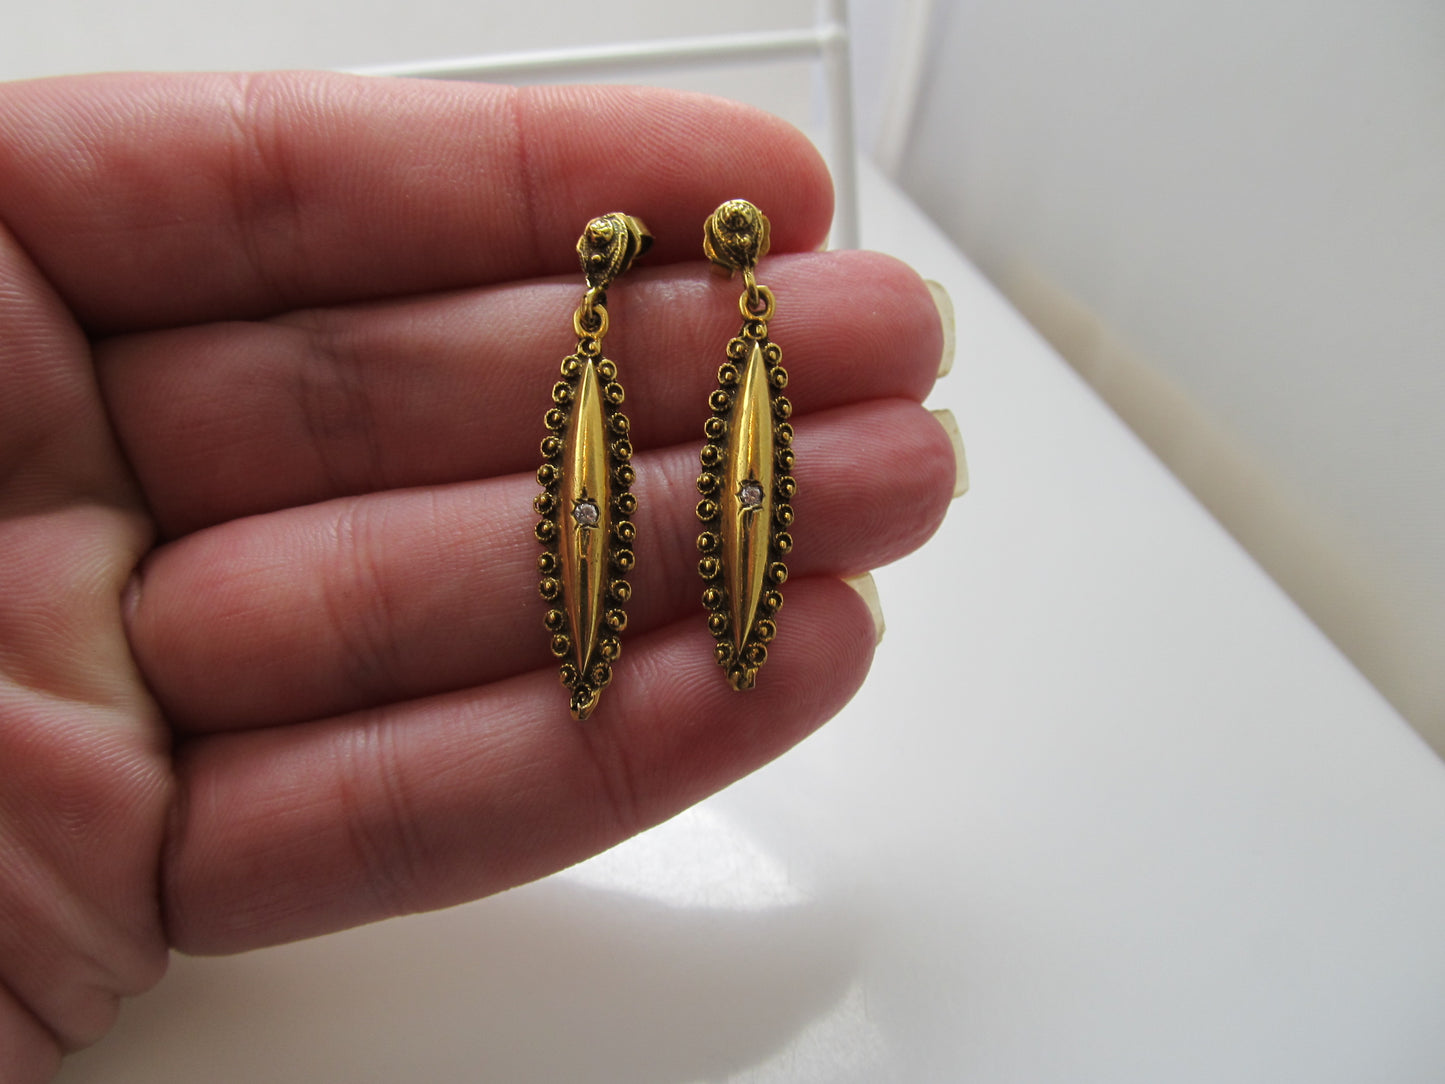 Vintage yellow gold drop earrings